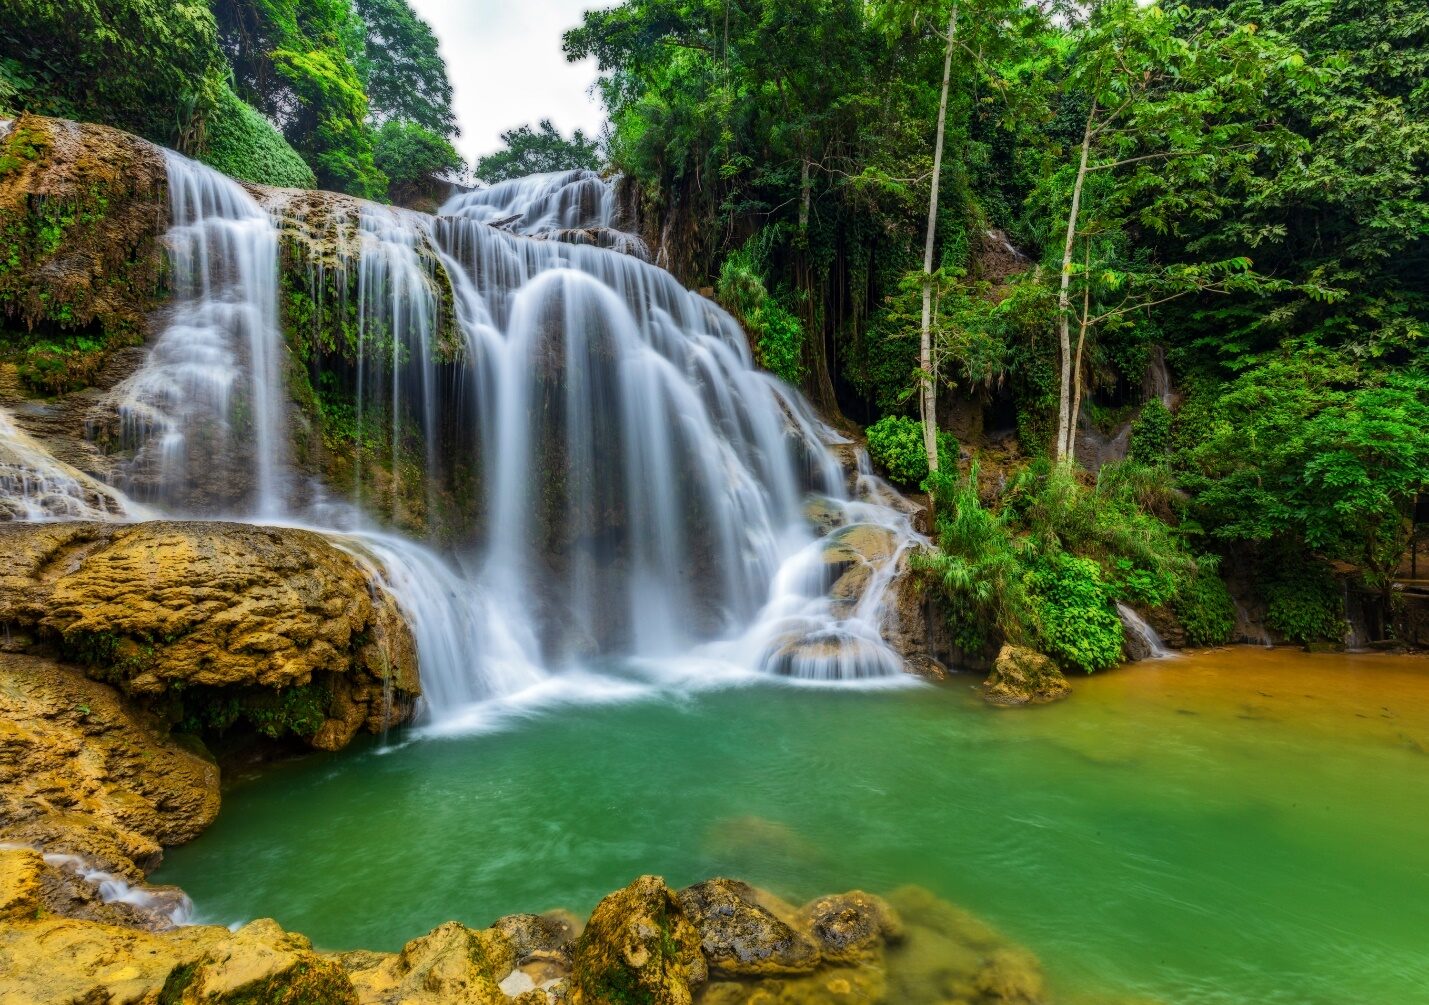 Mu Waterfall Hoa Binh: A serene haven amidst nature for your getaway